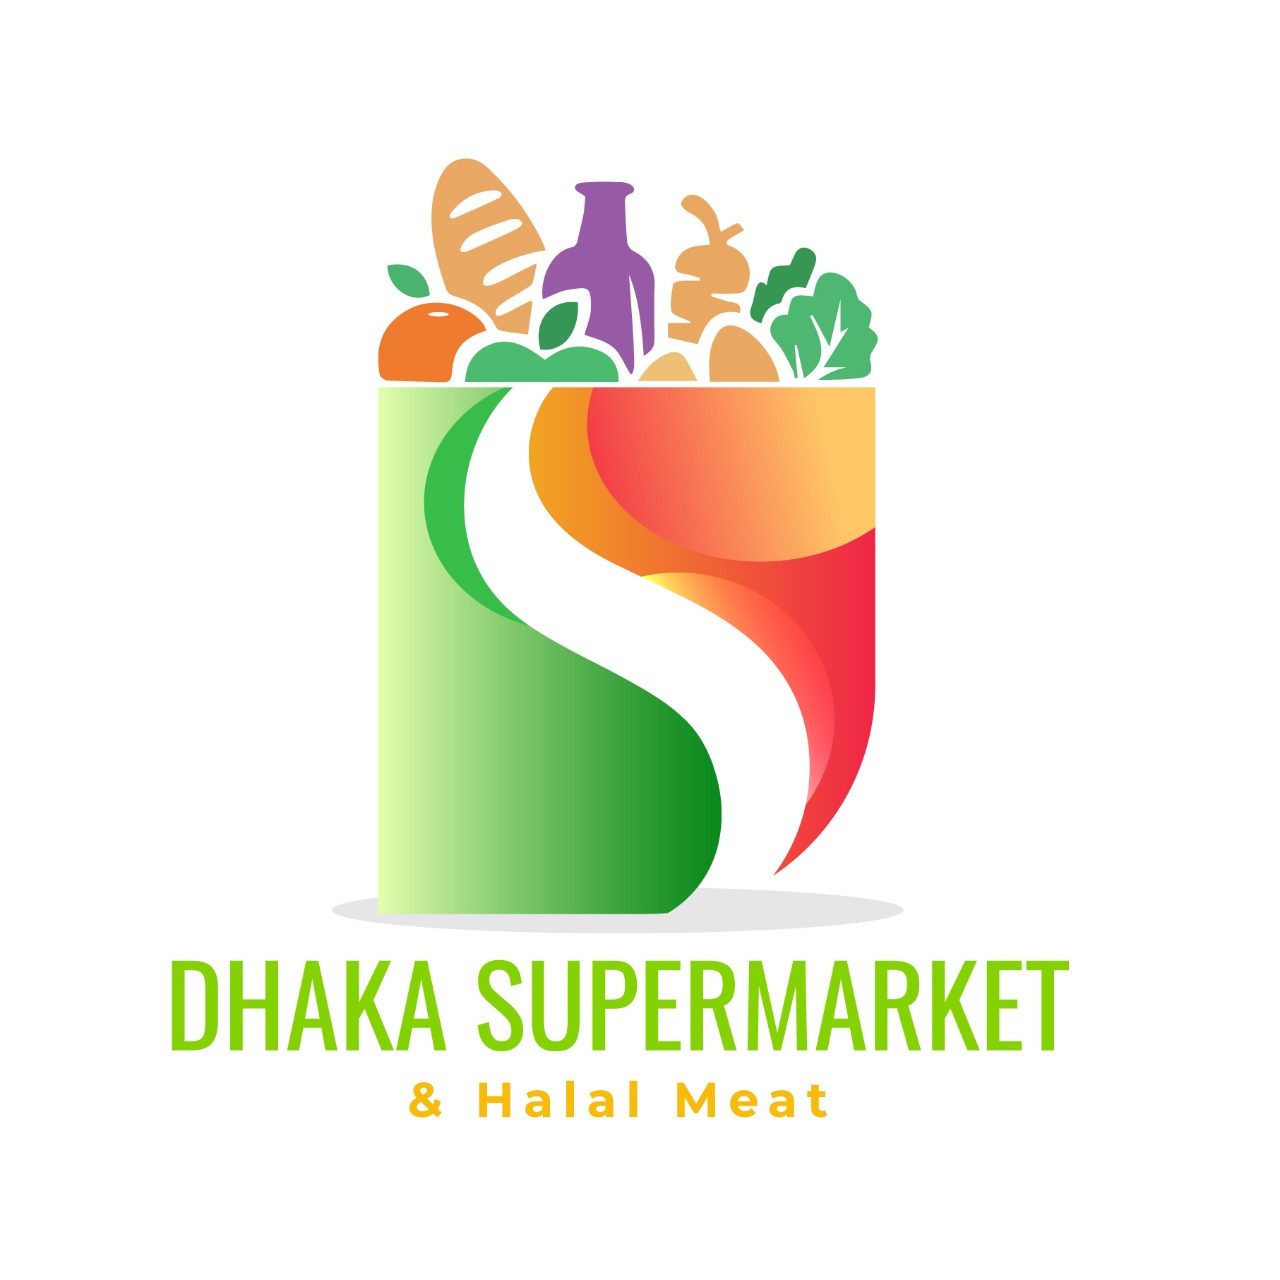 Dhaka Supermarket & Halal Meat Logo